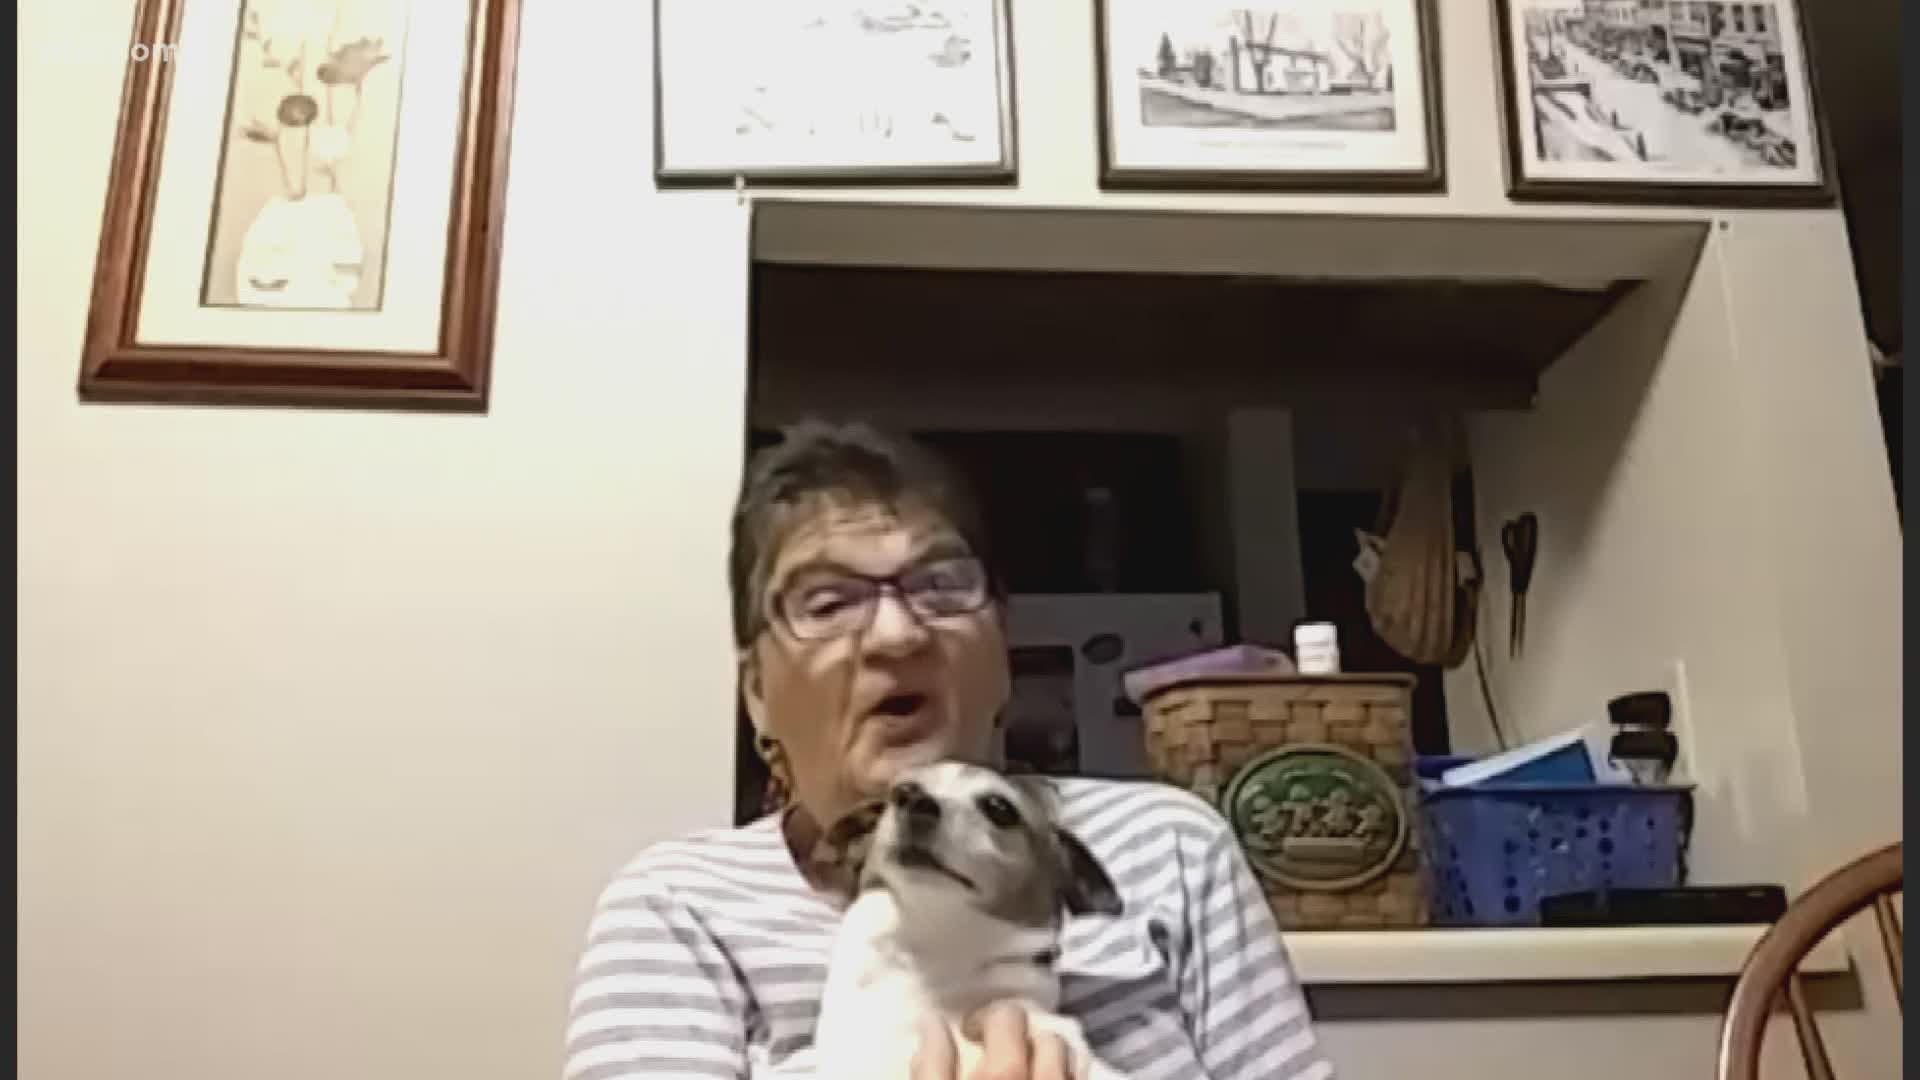 The organization pairs senior citizens with senior pets